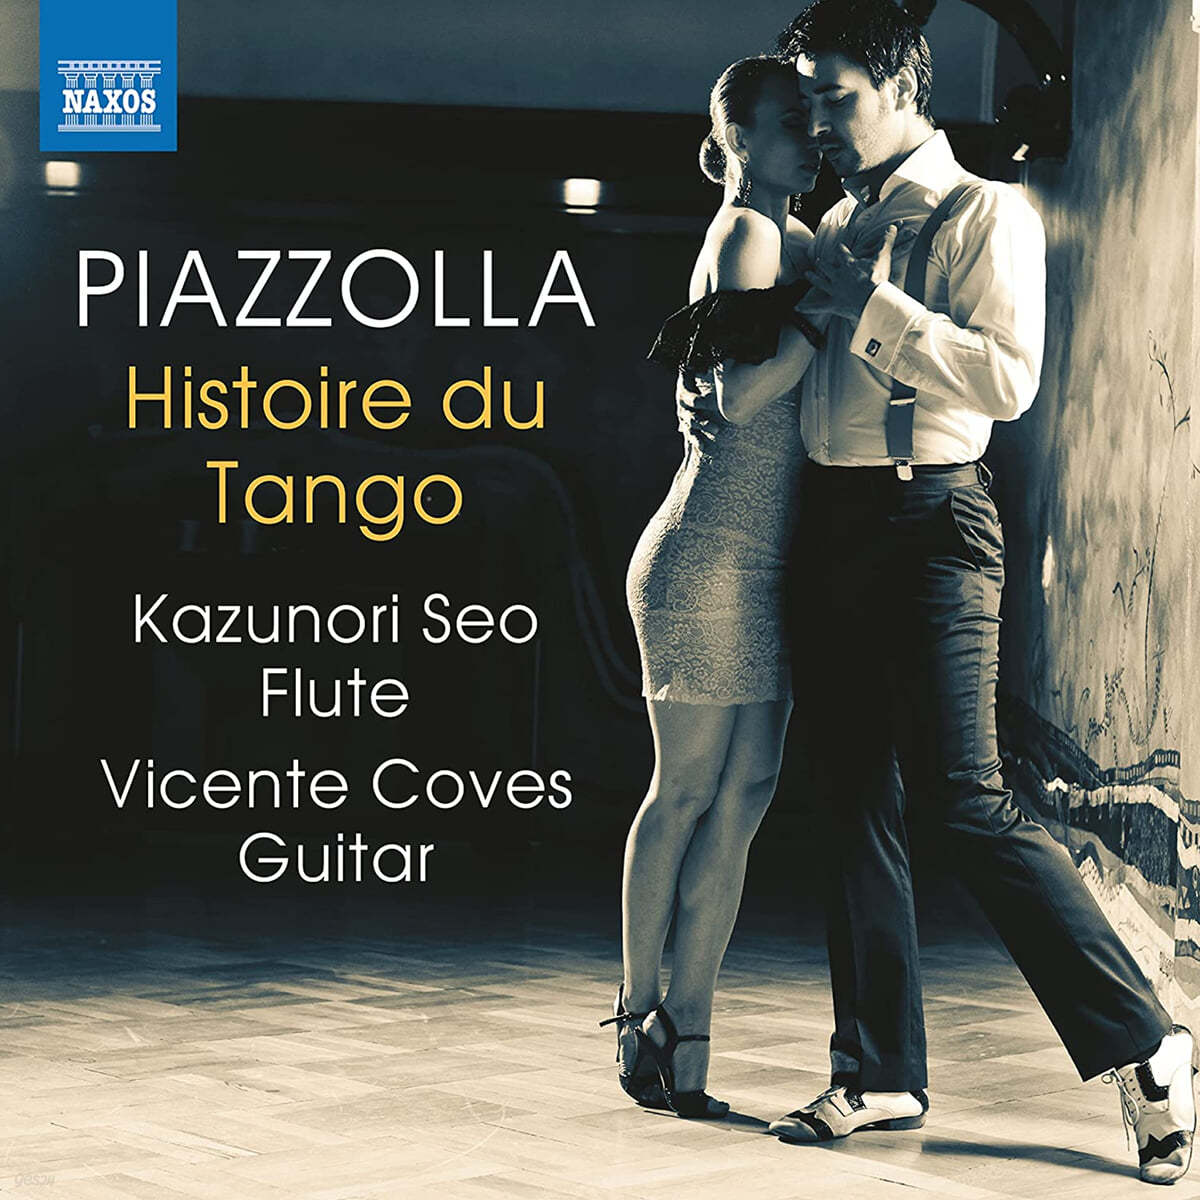 Kazunori Seo 피아졸라: 플루트와 기타를 위한 작품집 (Piazzolla: Works for Flute and Guitar - Histoire du Tango) 